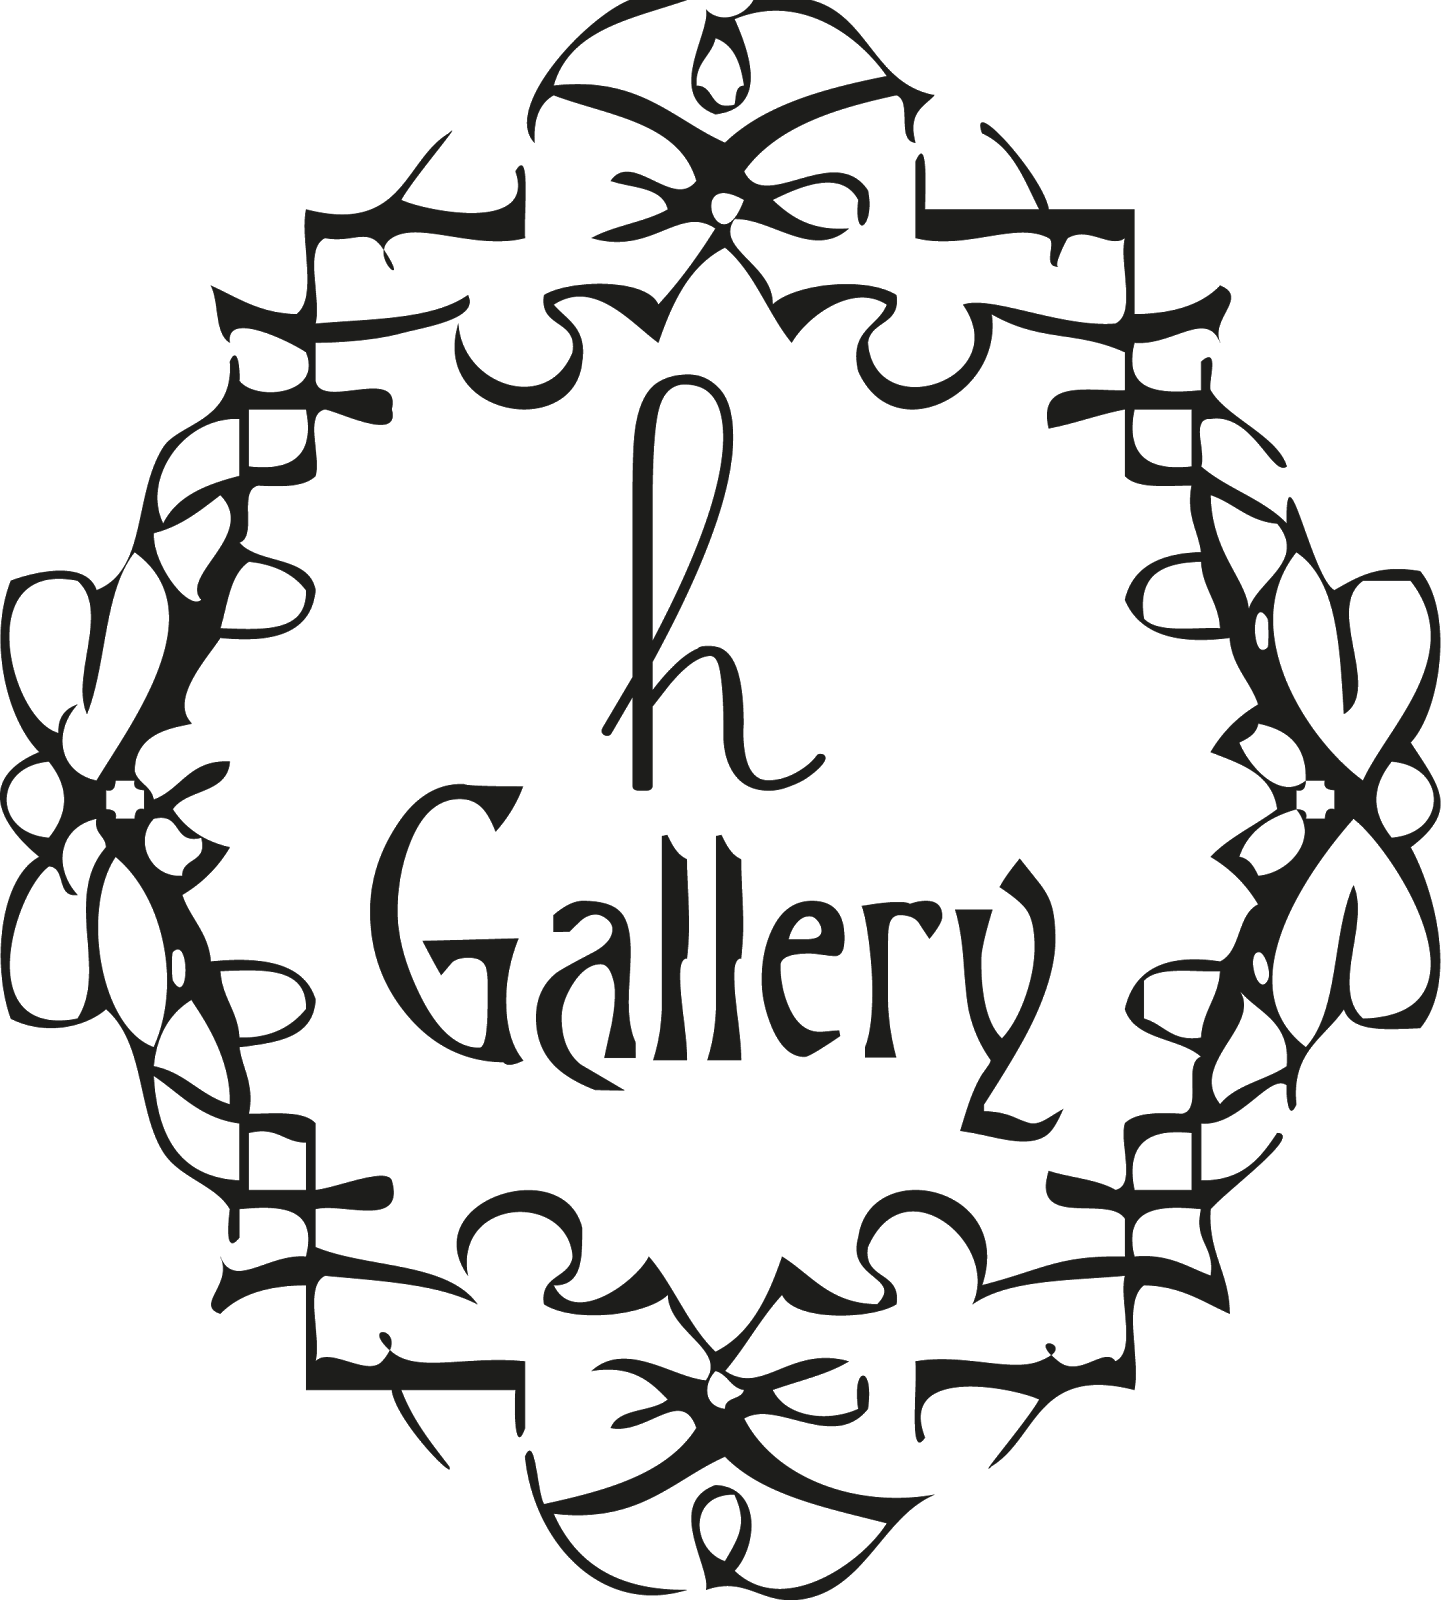 h Gallery